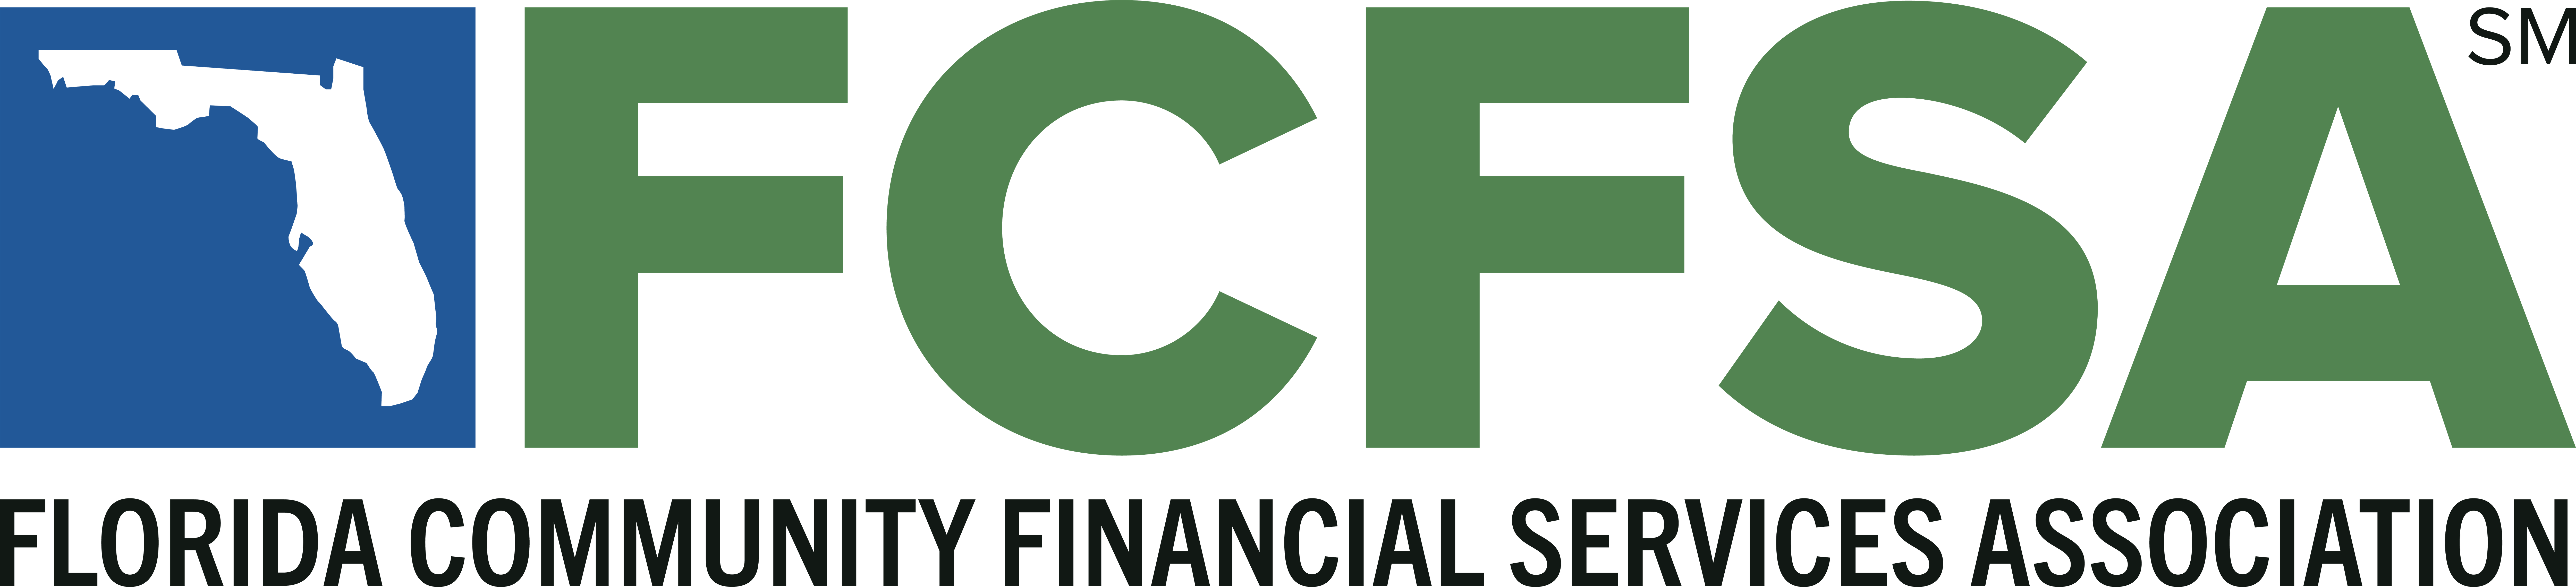 FCFSA Full Logo-Dark Color